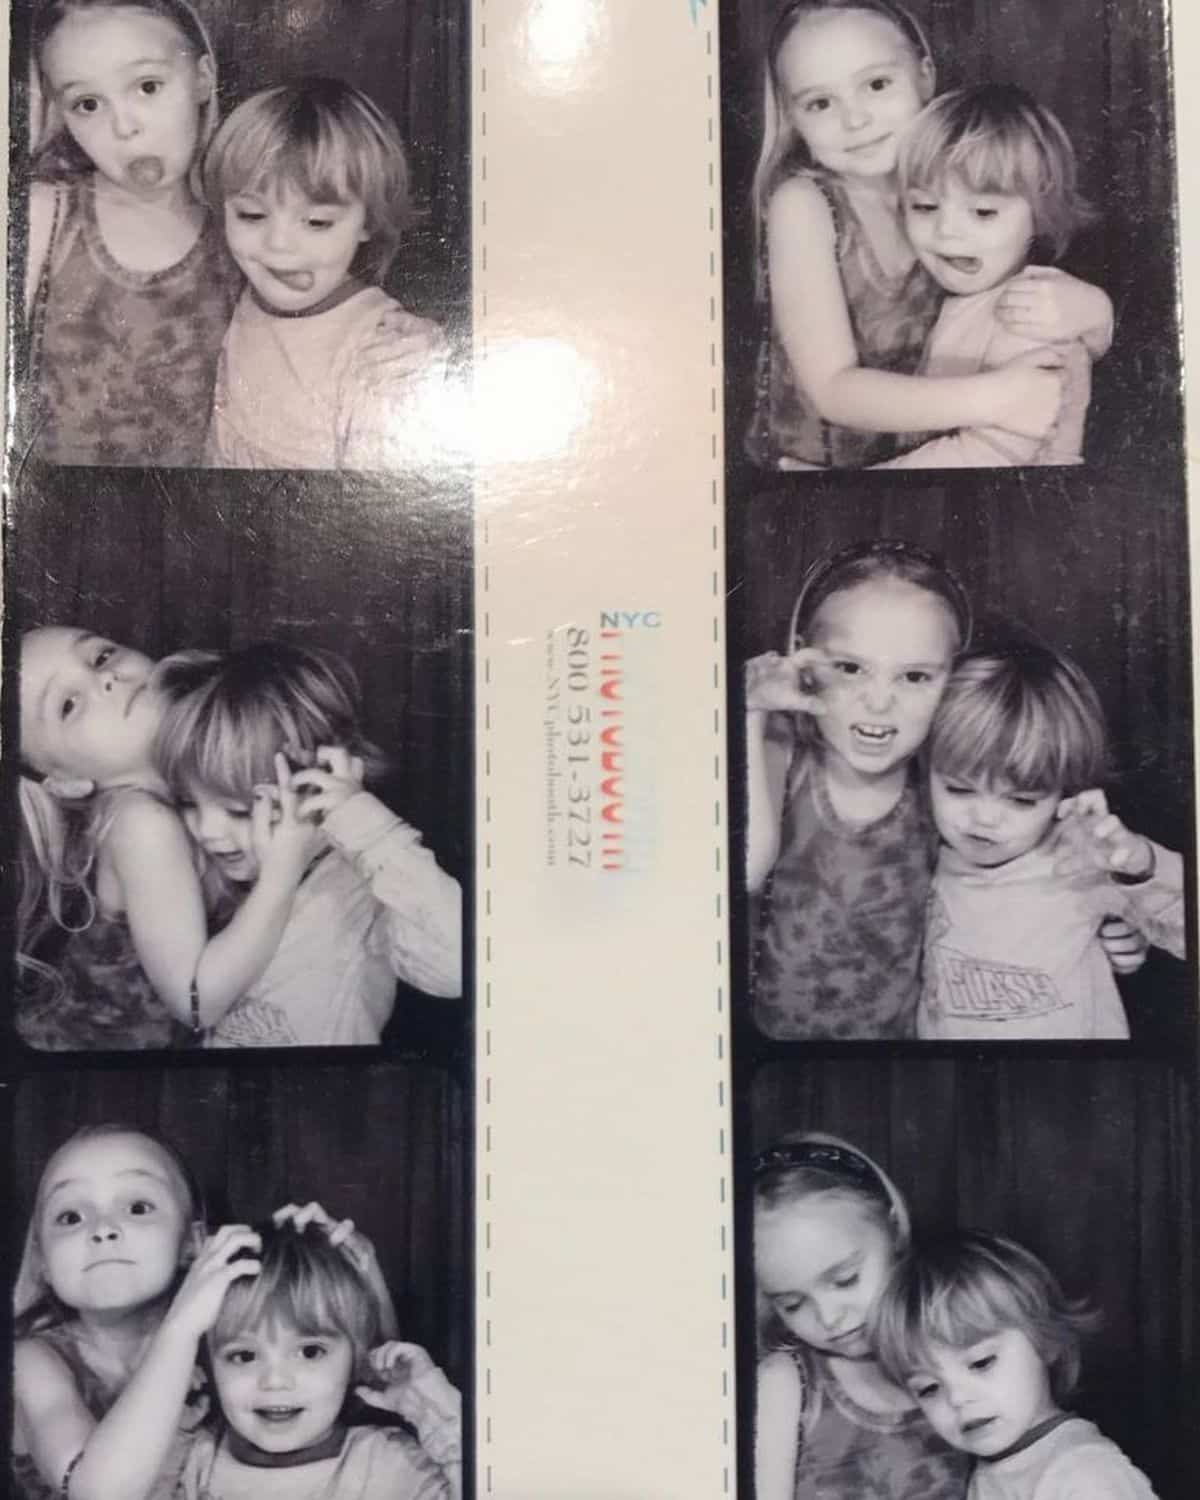 Johnny Depp's children, Lily-Rose Melody Depp and Jack Depp (Photo: Instagram).